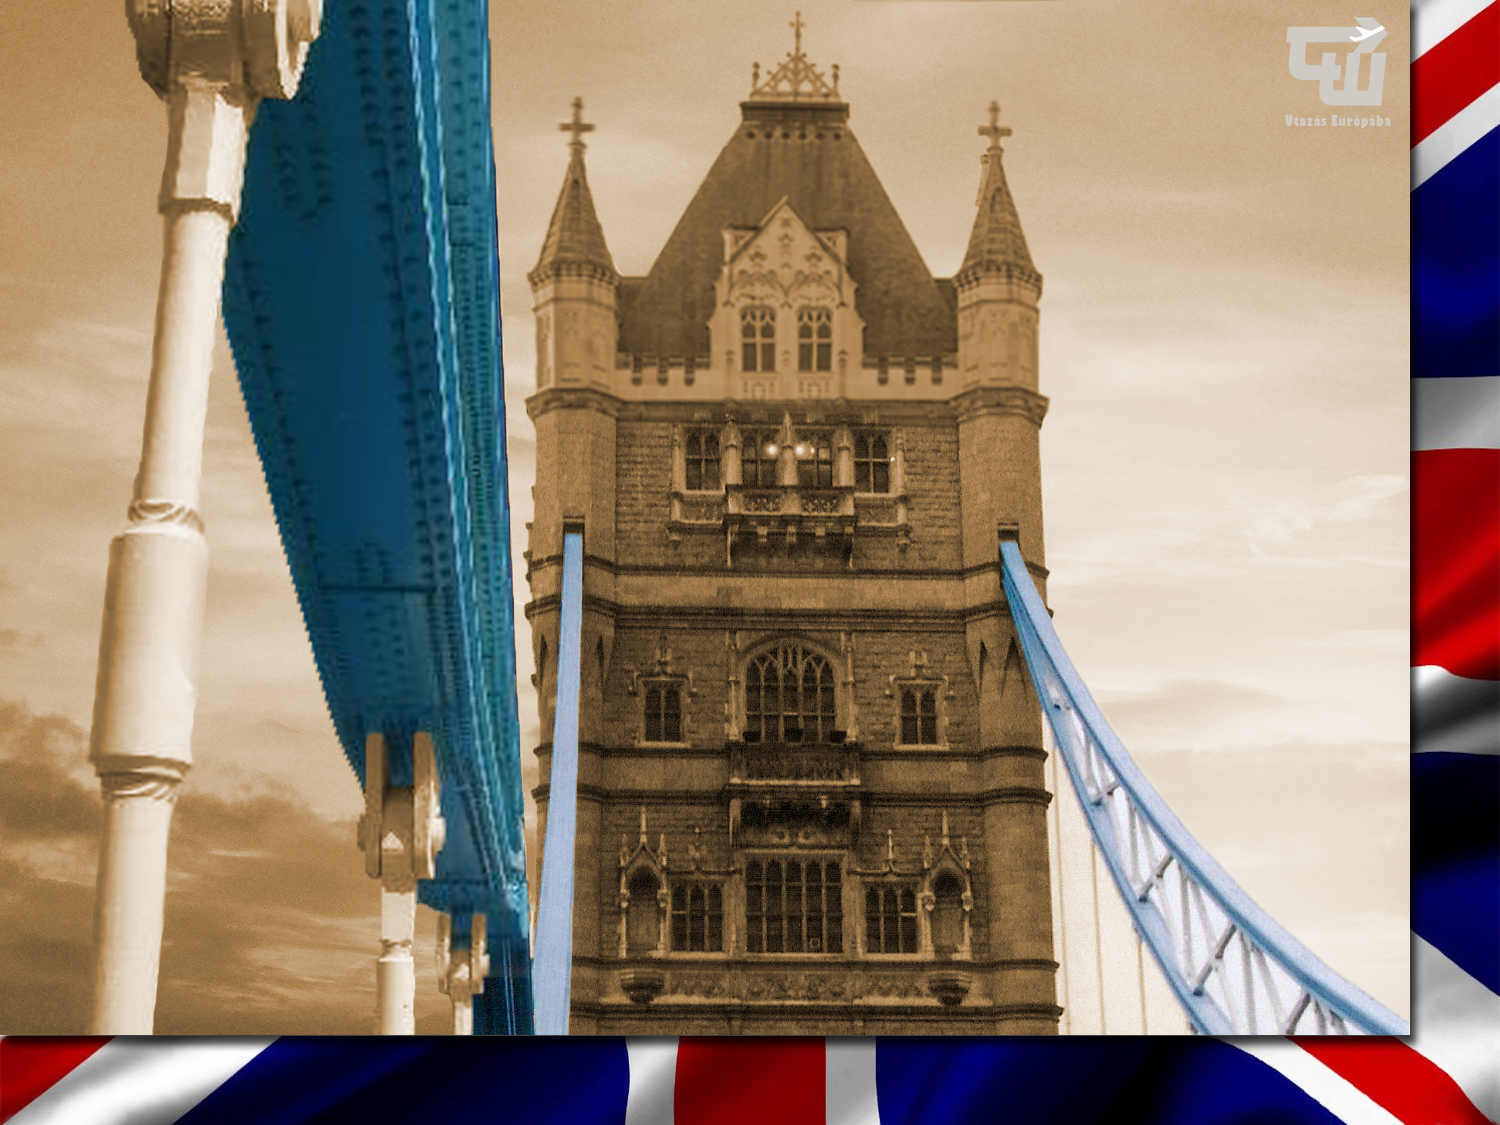 01_tower_bridge_temze_thames_london_nagy-britannia_anglia_great_britain_england_utazas_europaba.jpg